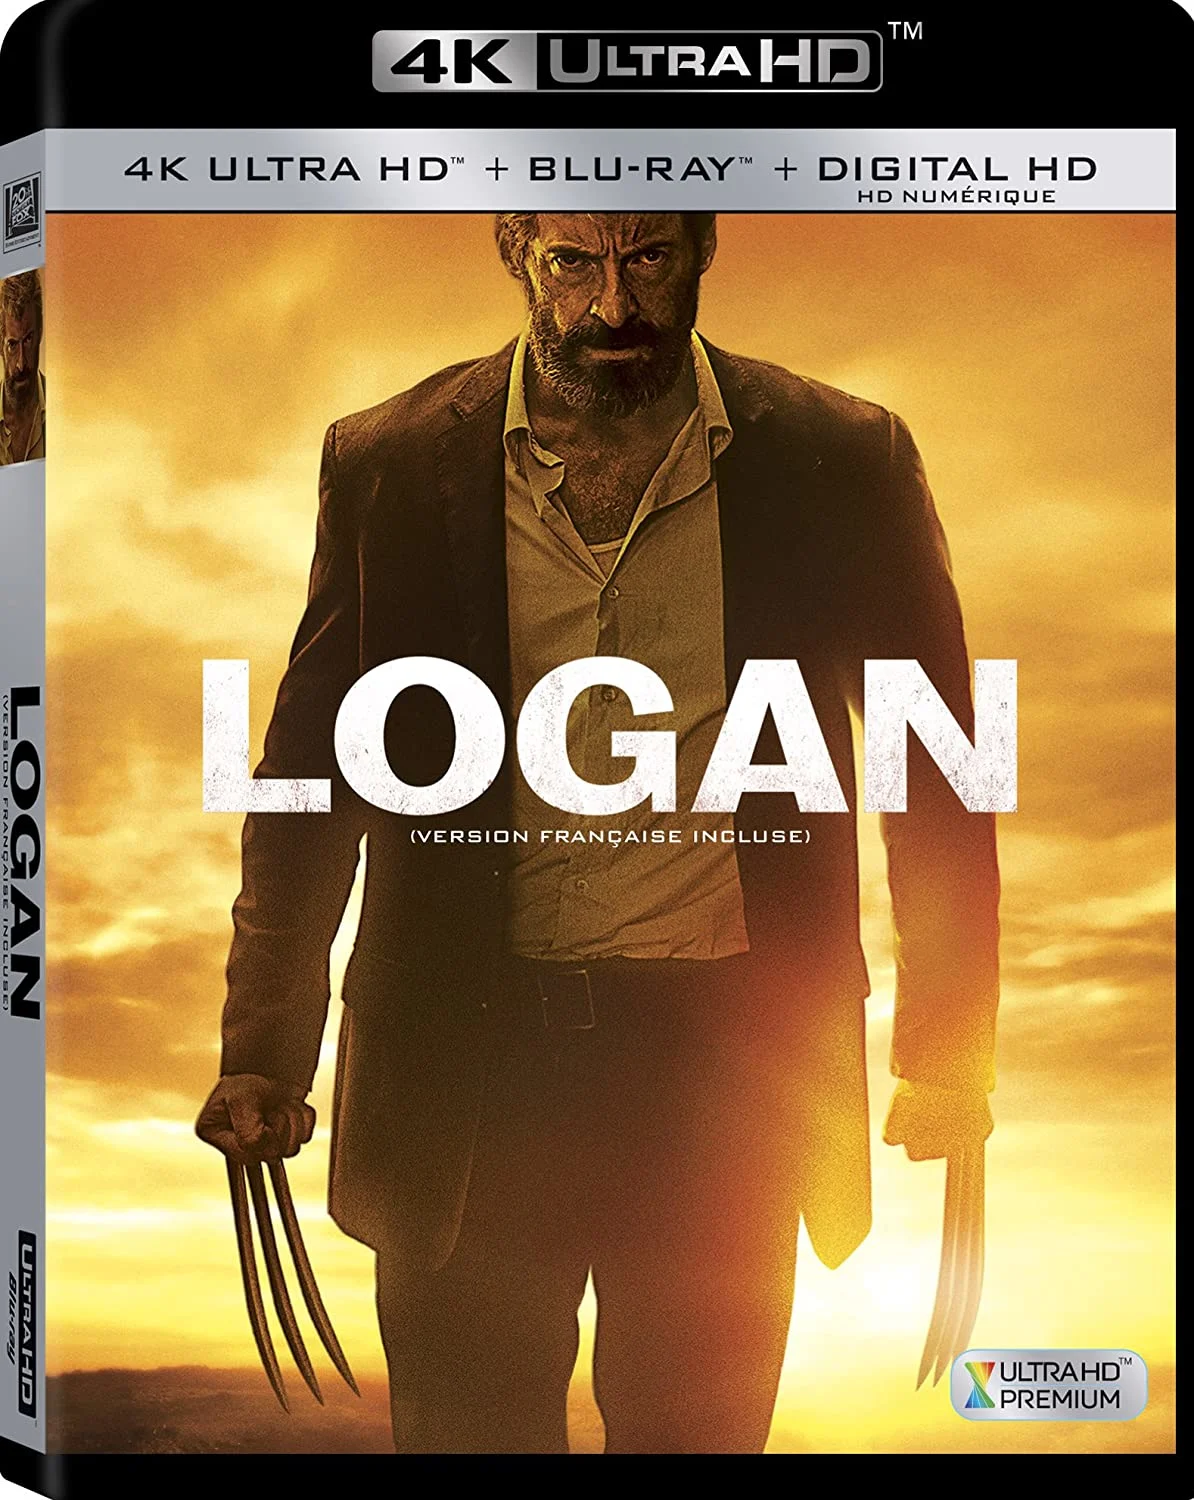 Logan (4K-UHD) on MovieShack